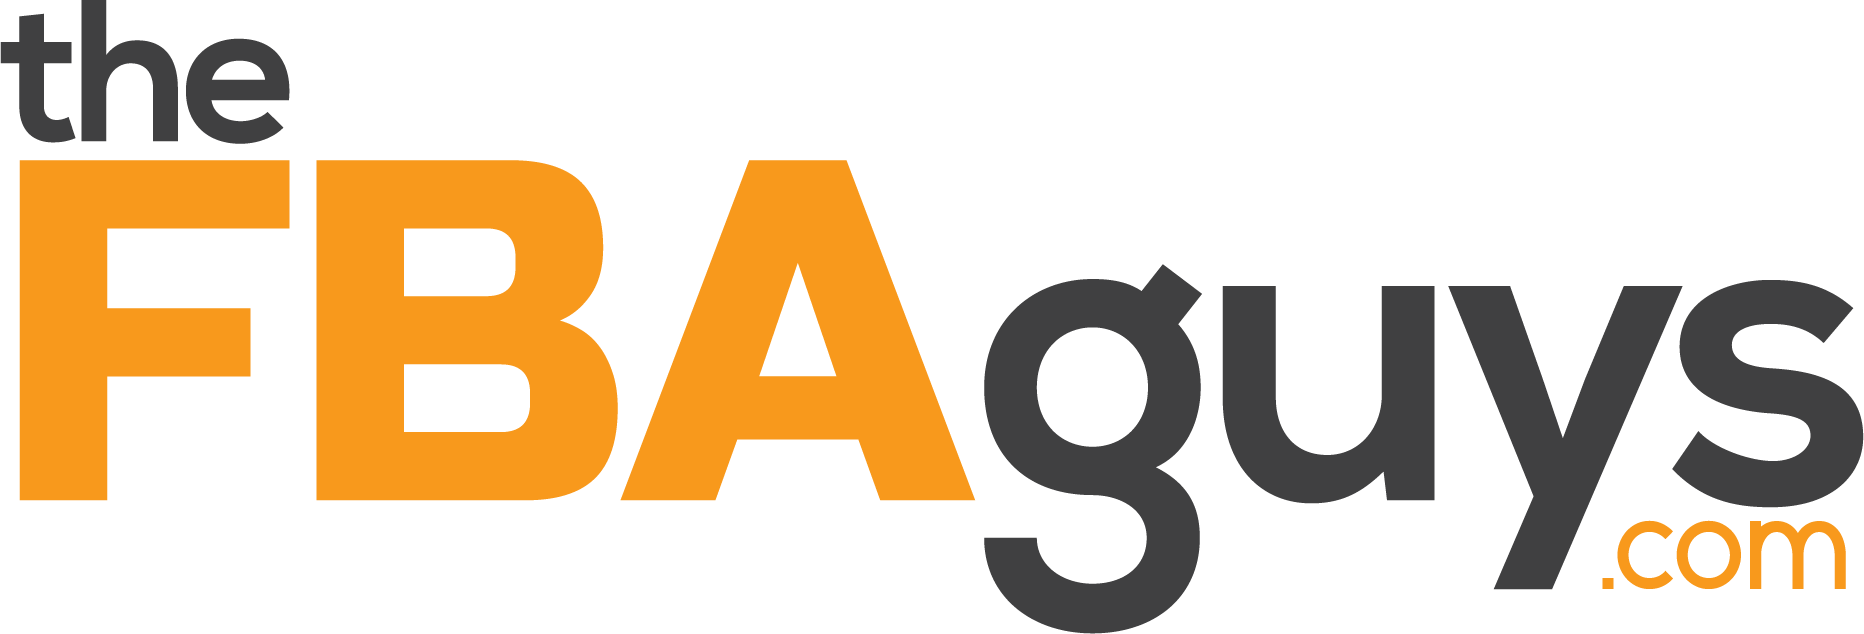 The FBA Guys Logo